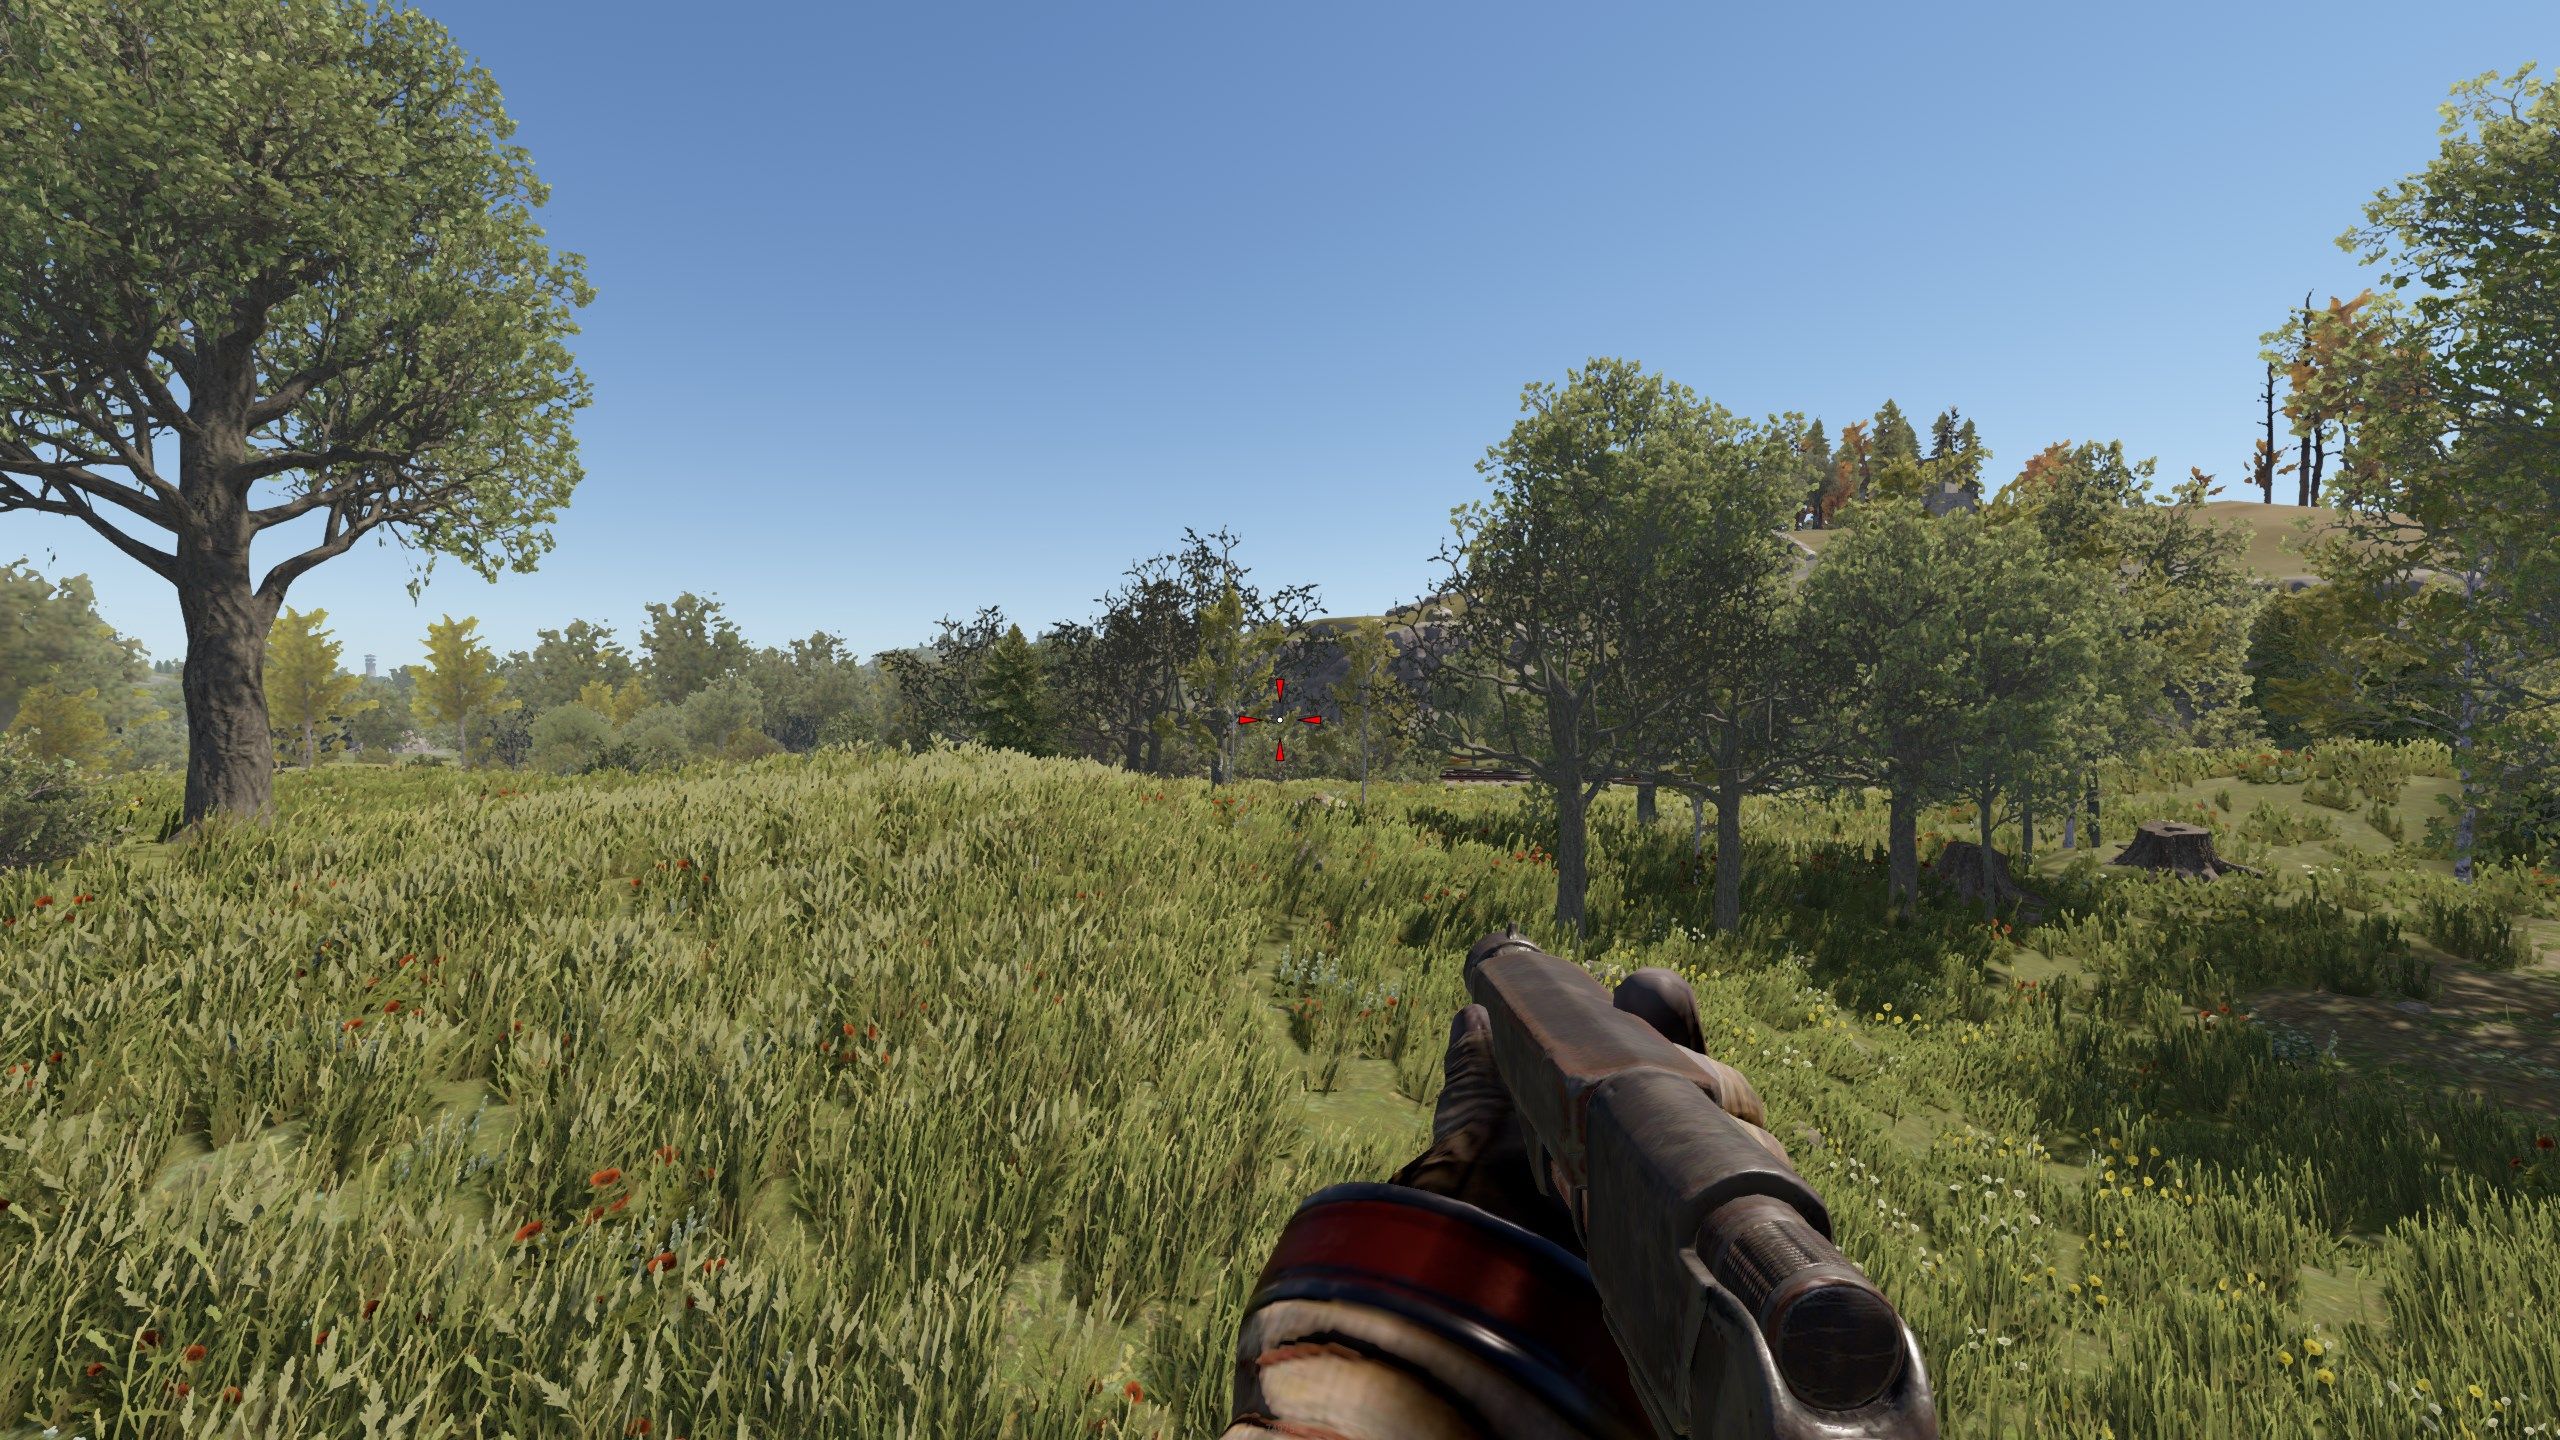 Example 3 - Custom crosshair with pump shotgun (in Rust PC game)